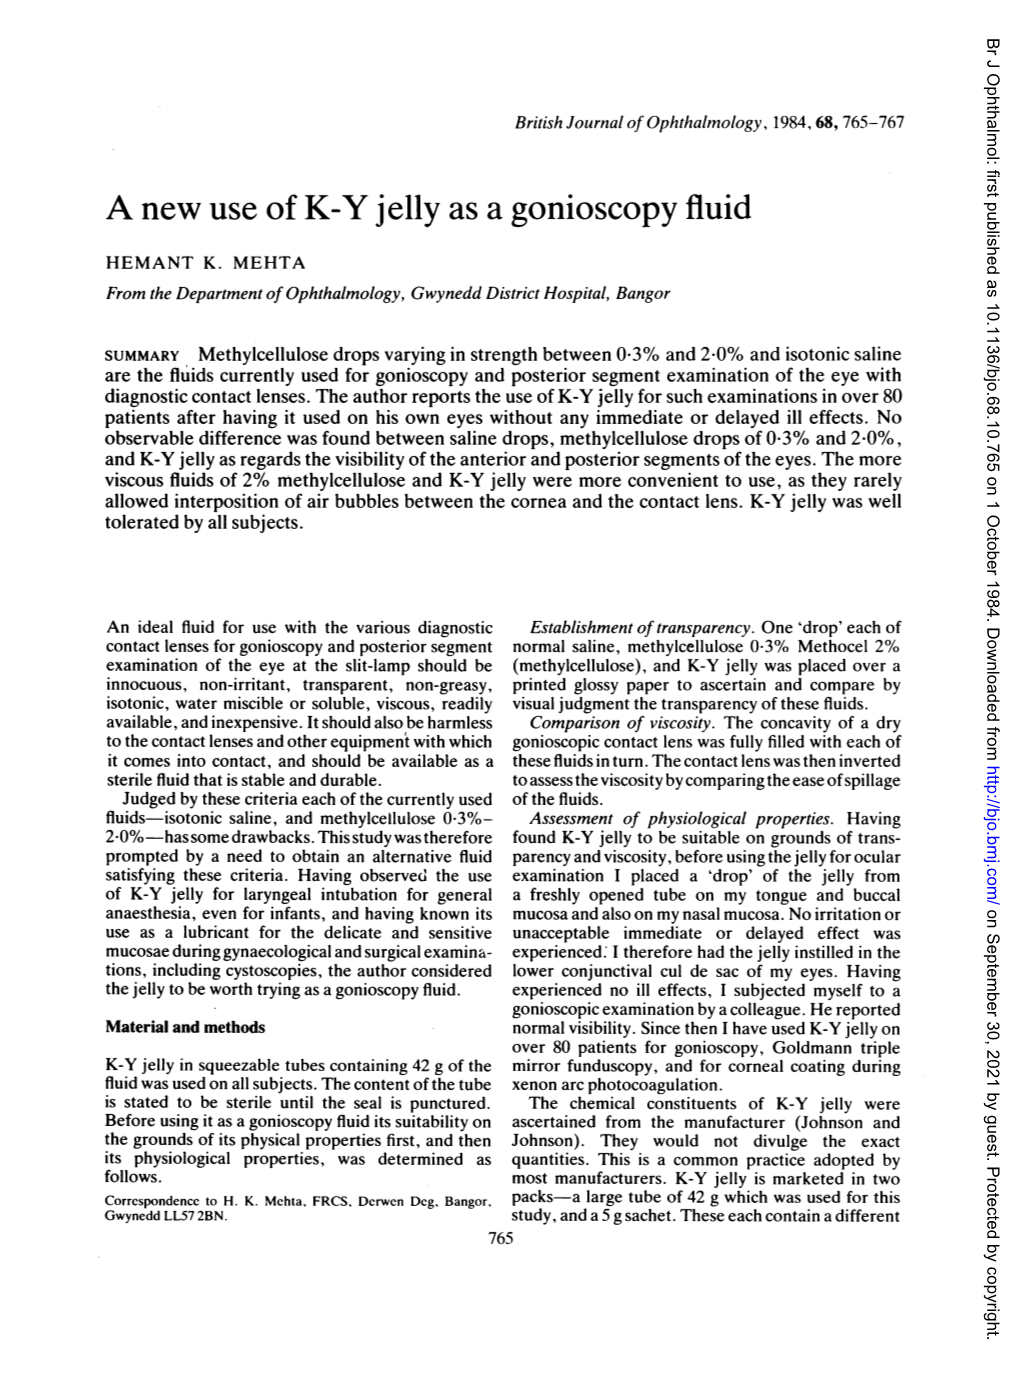 A New Use of K-Y Jelly As a Gonioscopy Fluid